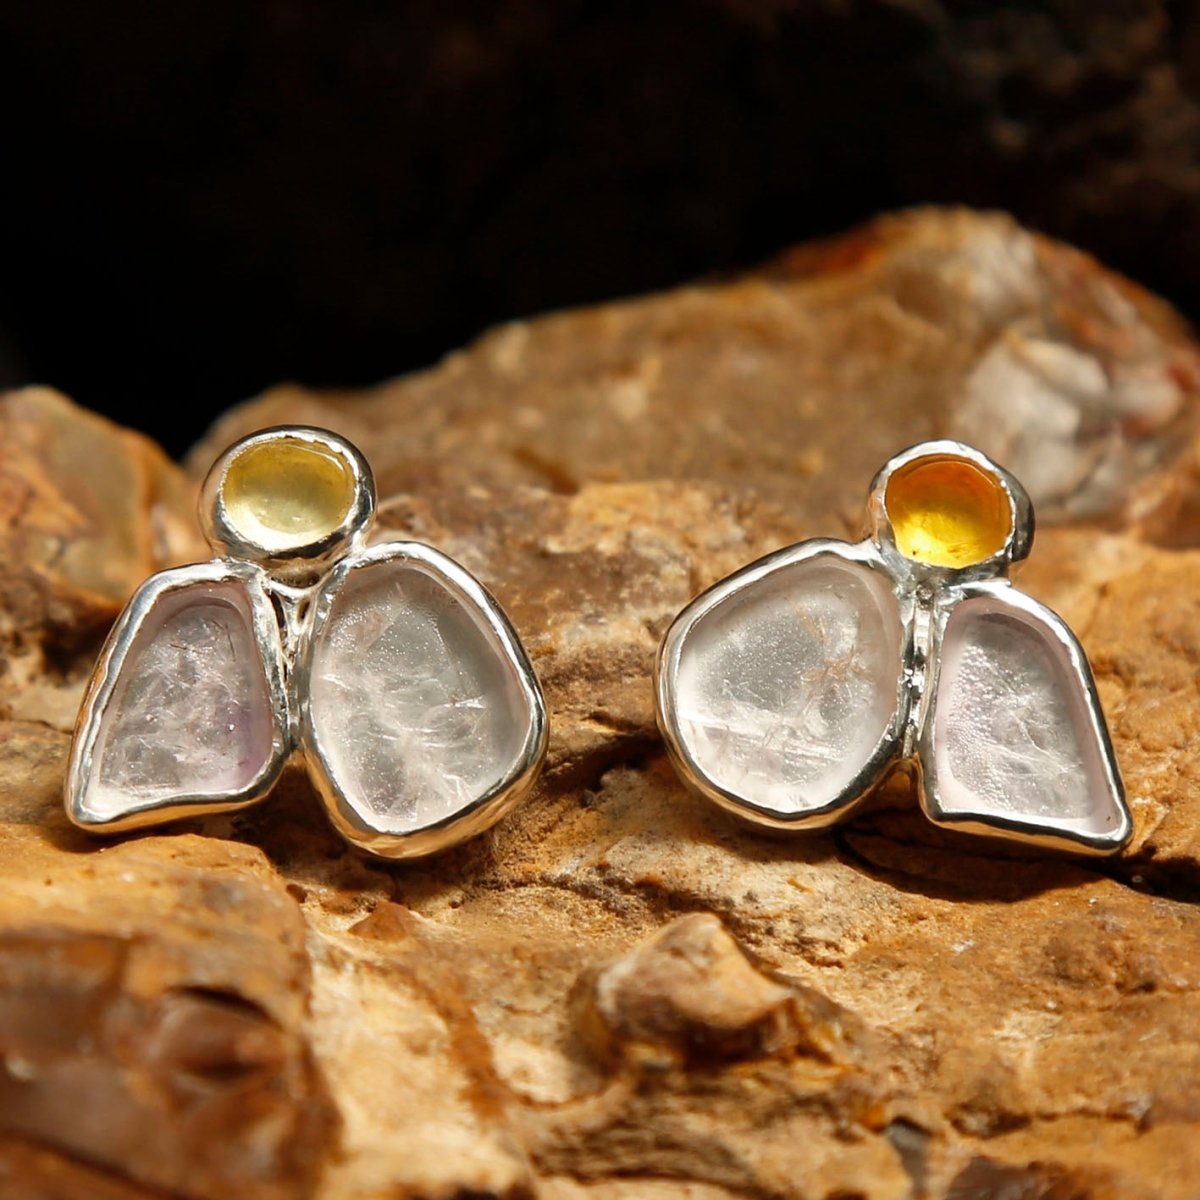 handmade amber and amethyst earrings in sterling silver